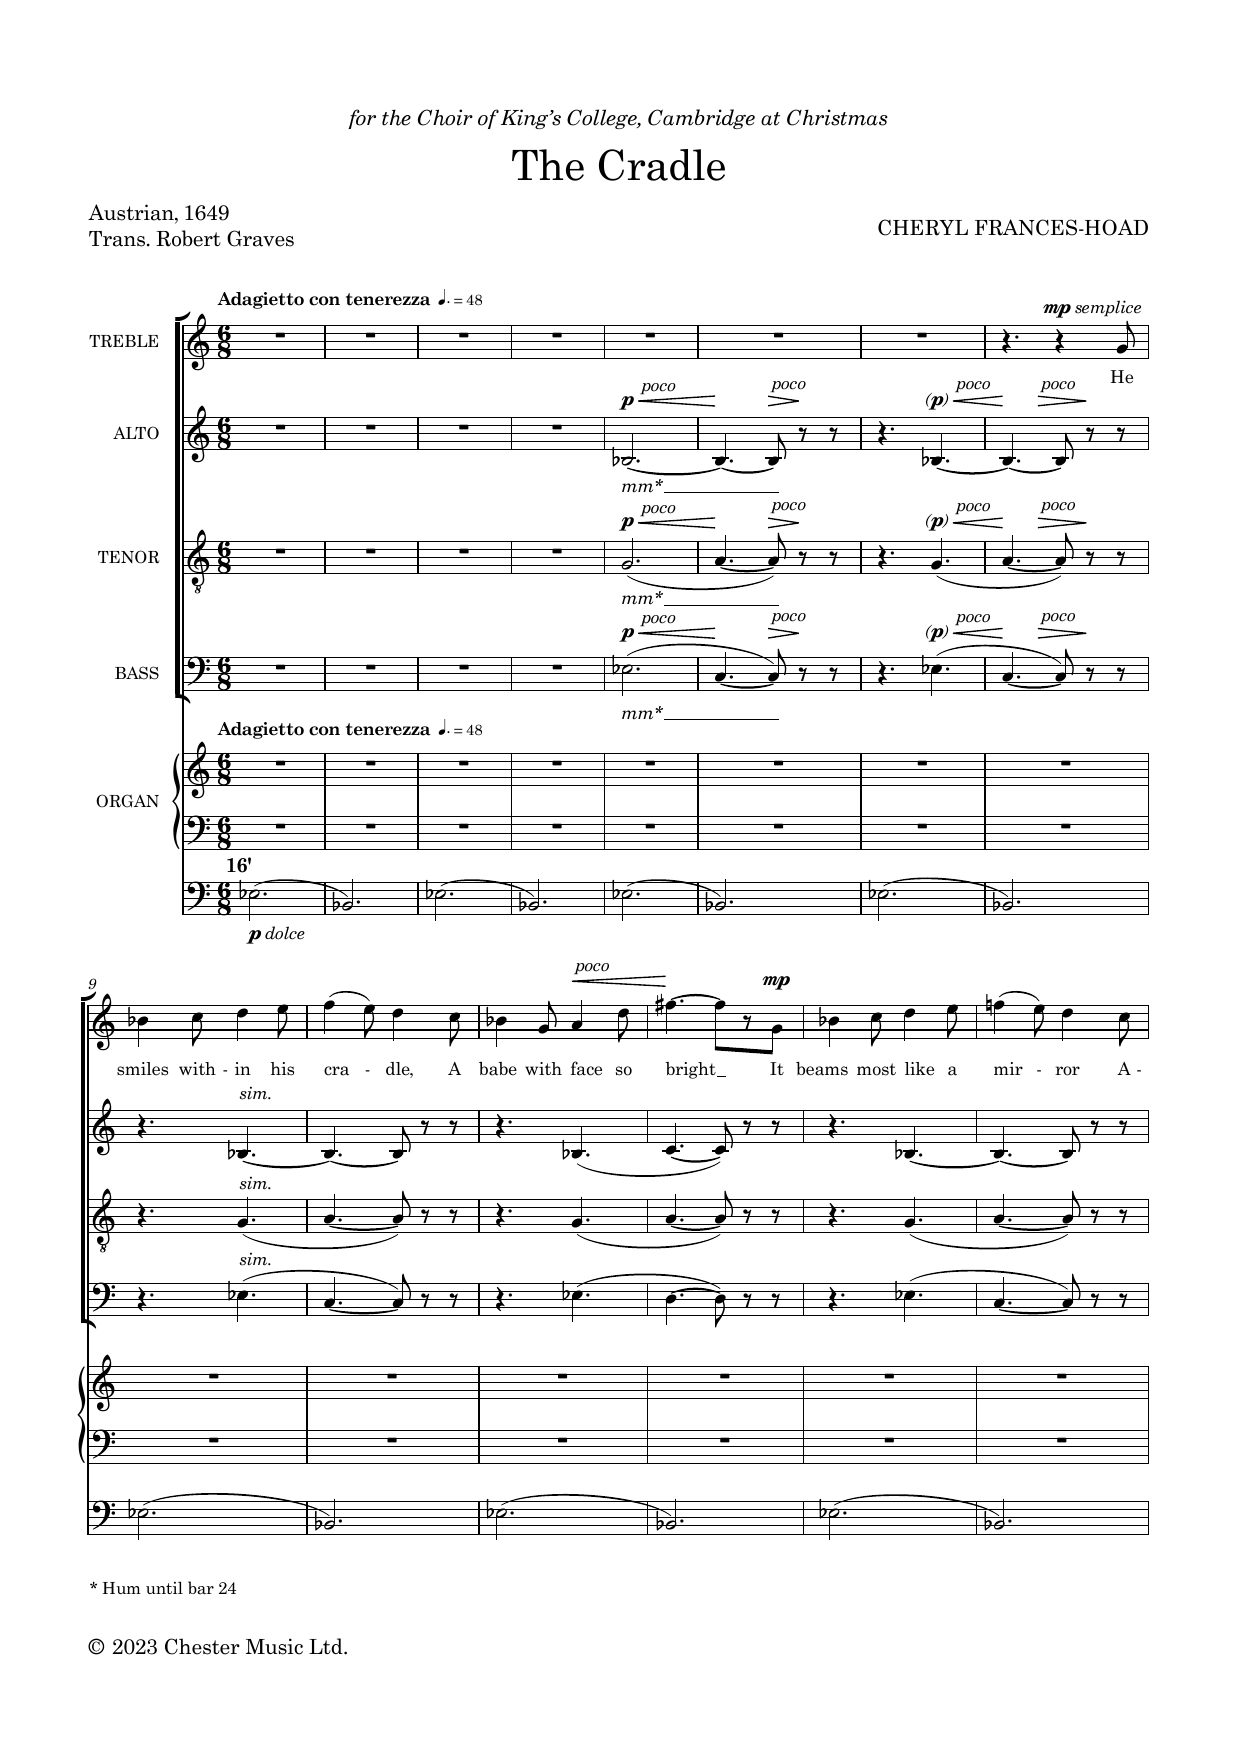 Cheryl Frances-Hoad The Cradle sheet music notes printable PDF score